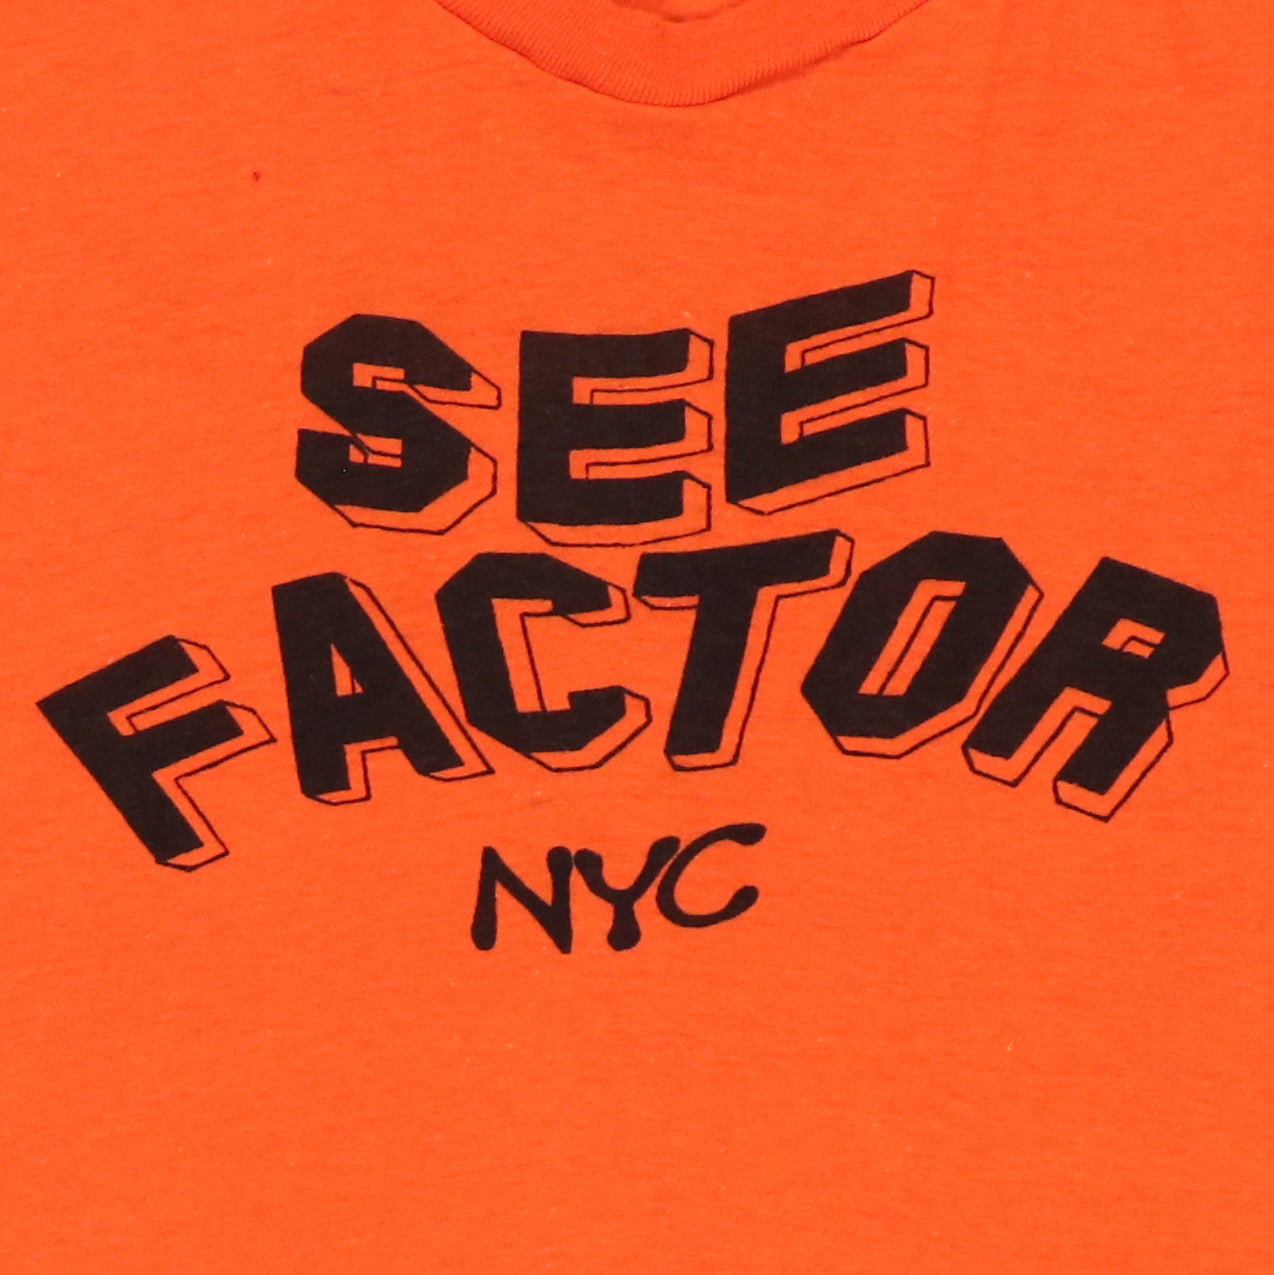 1974 Deep Purple See Factor Fall Tour Crew Shirt